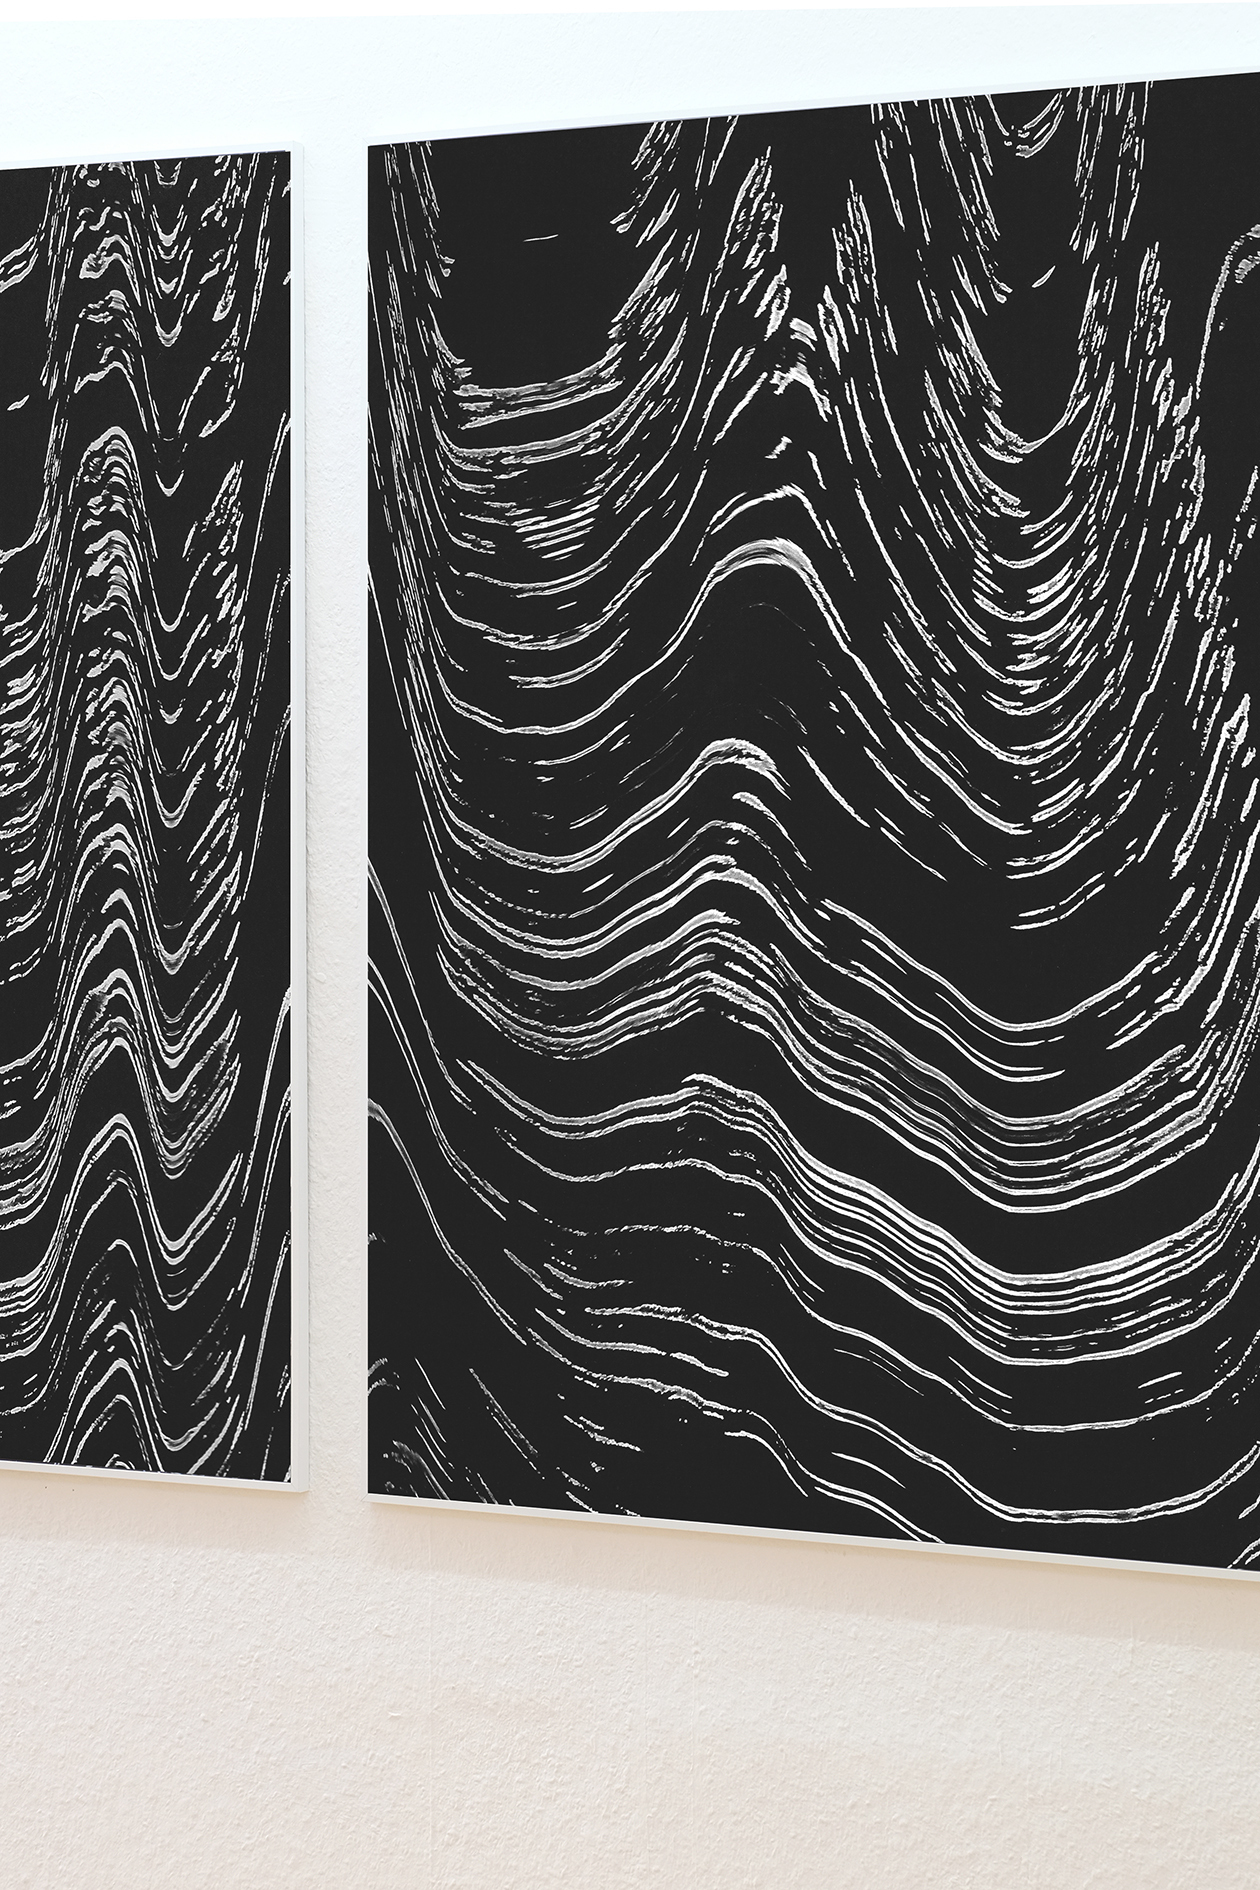 Dorothee Waldenmaier, Kopie, Fine Art Prints, 84,1 × 118,9 cm, 2020